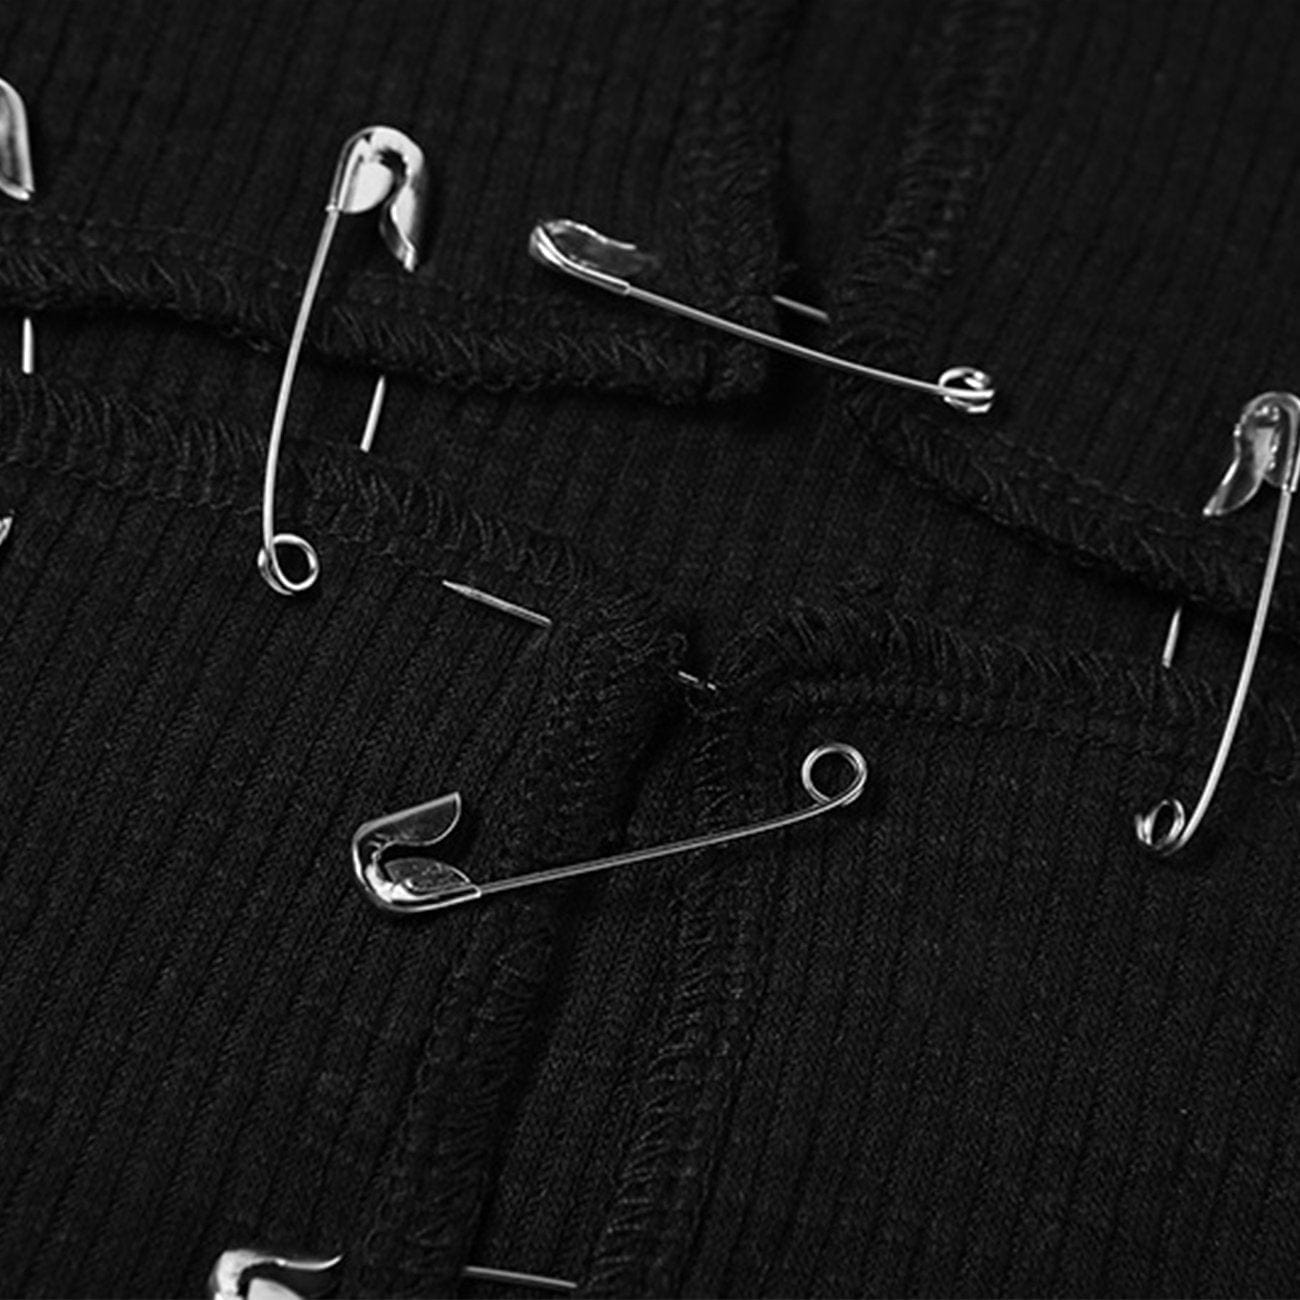 Paperclip Cross Short Sleeve T Shirt Streetwear Brand Techwear Combat Tactical YUGEN THEORY